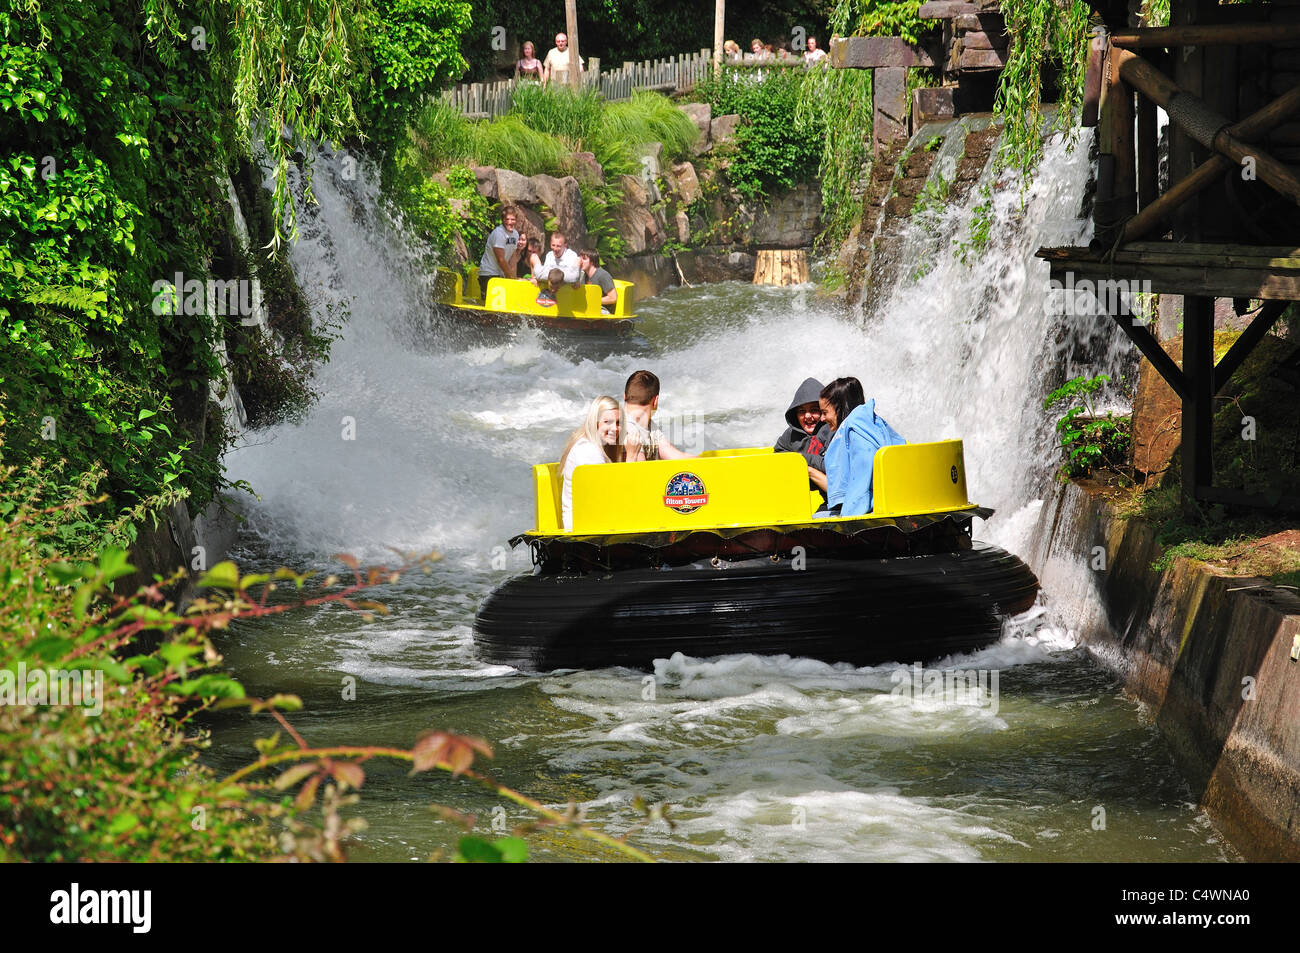 'Congo River Rapids' ride at Alton Towers Theme Park, Alton, Staffordshire, England, United Kingdom Stock Photo